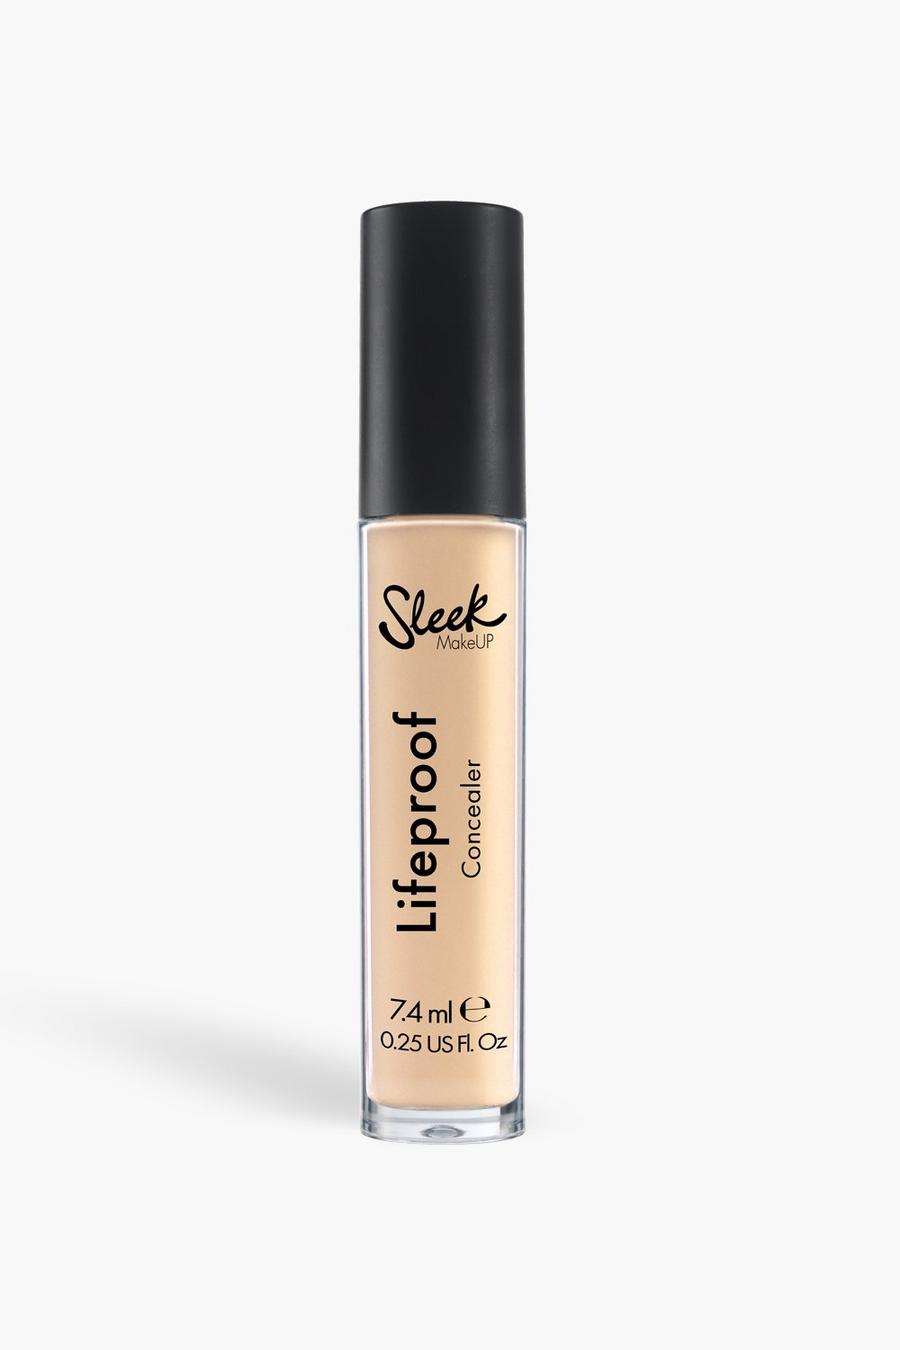 Sleek Makeup - Correcteur Lifeproof - Vanilla Shot (02) 7.4 ml, Crème white